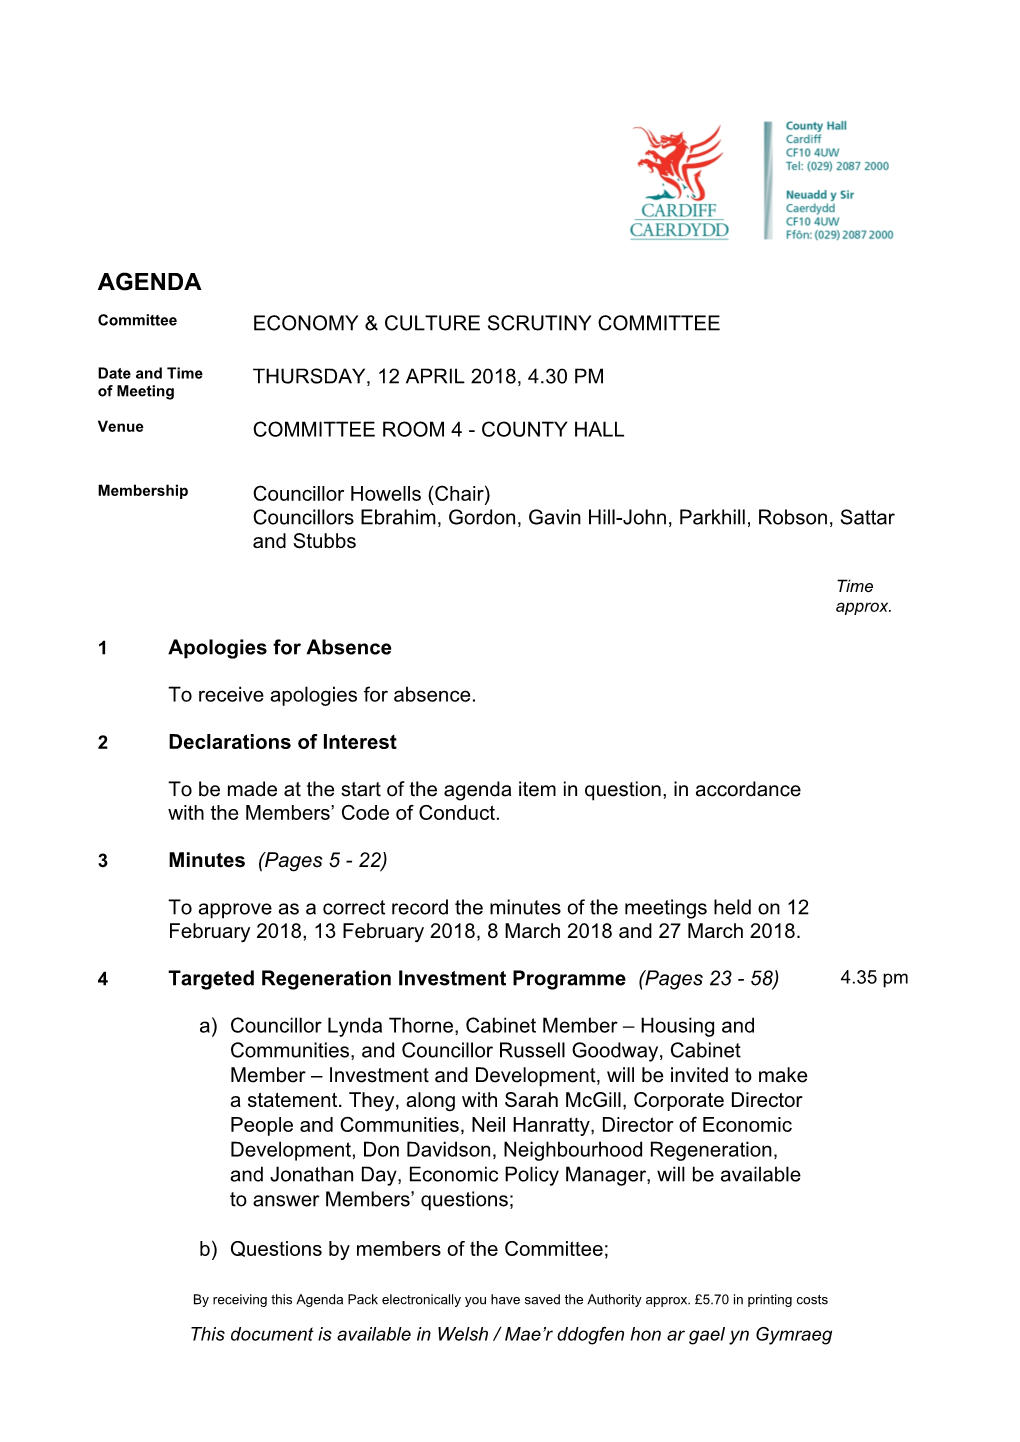 (Public Pack)Agenda Document for Economy & Culture Scrutiny